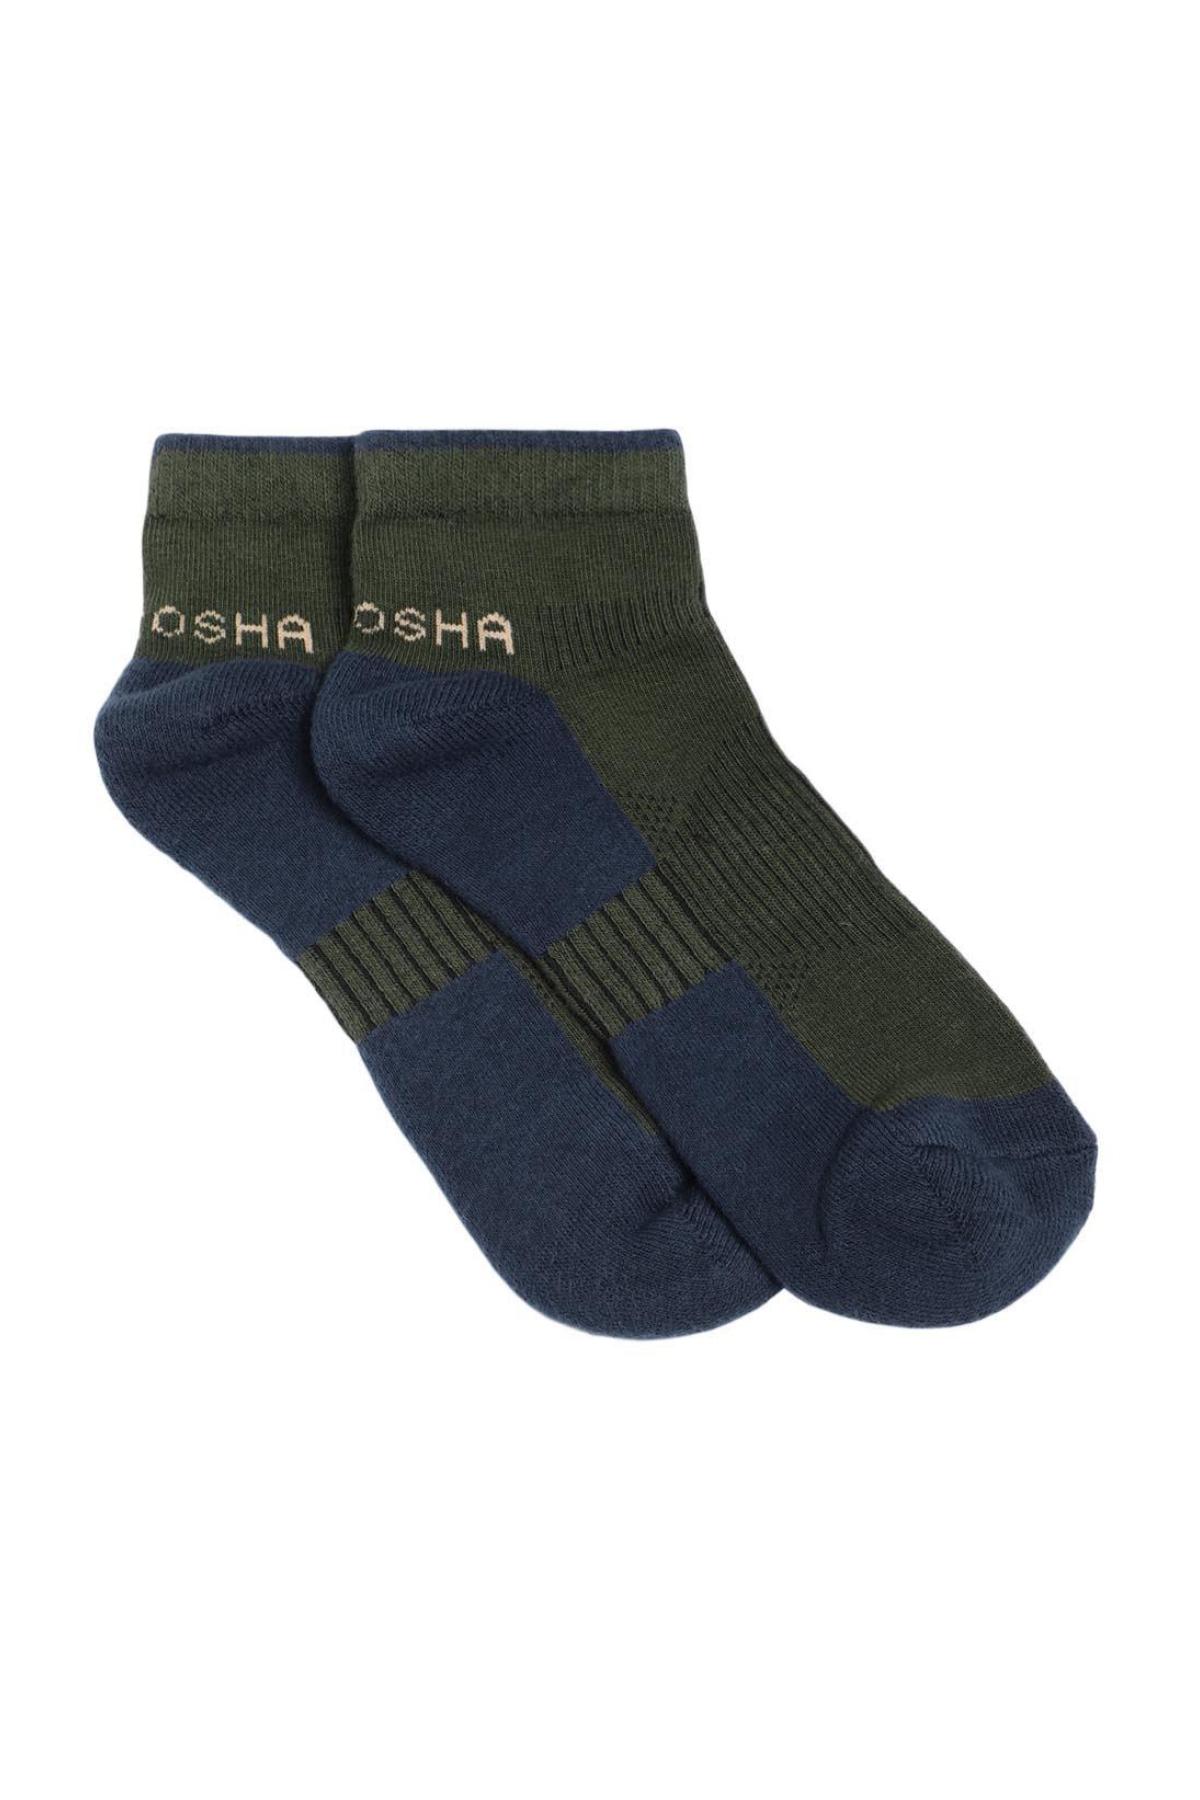 Olive & Navy Ankle Length Cotton Socks Pack of 2 | Men